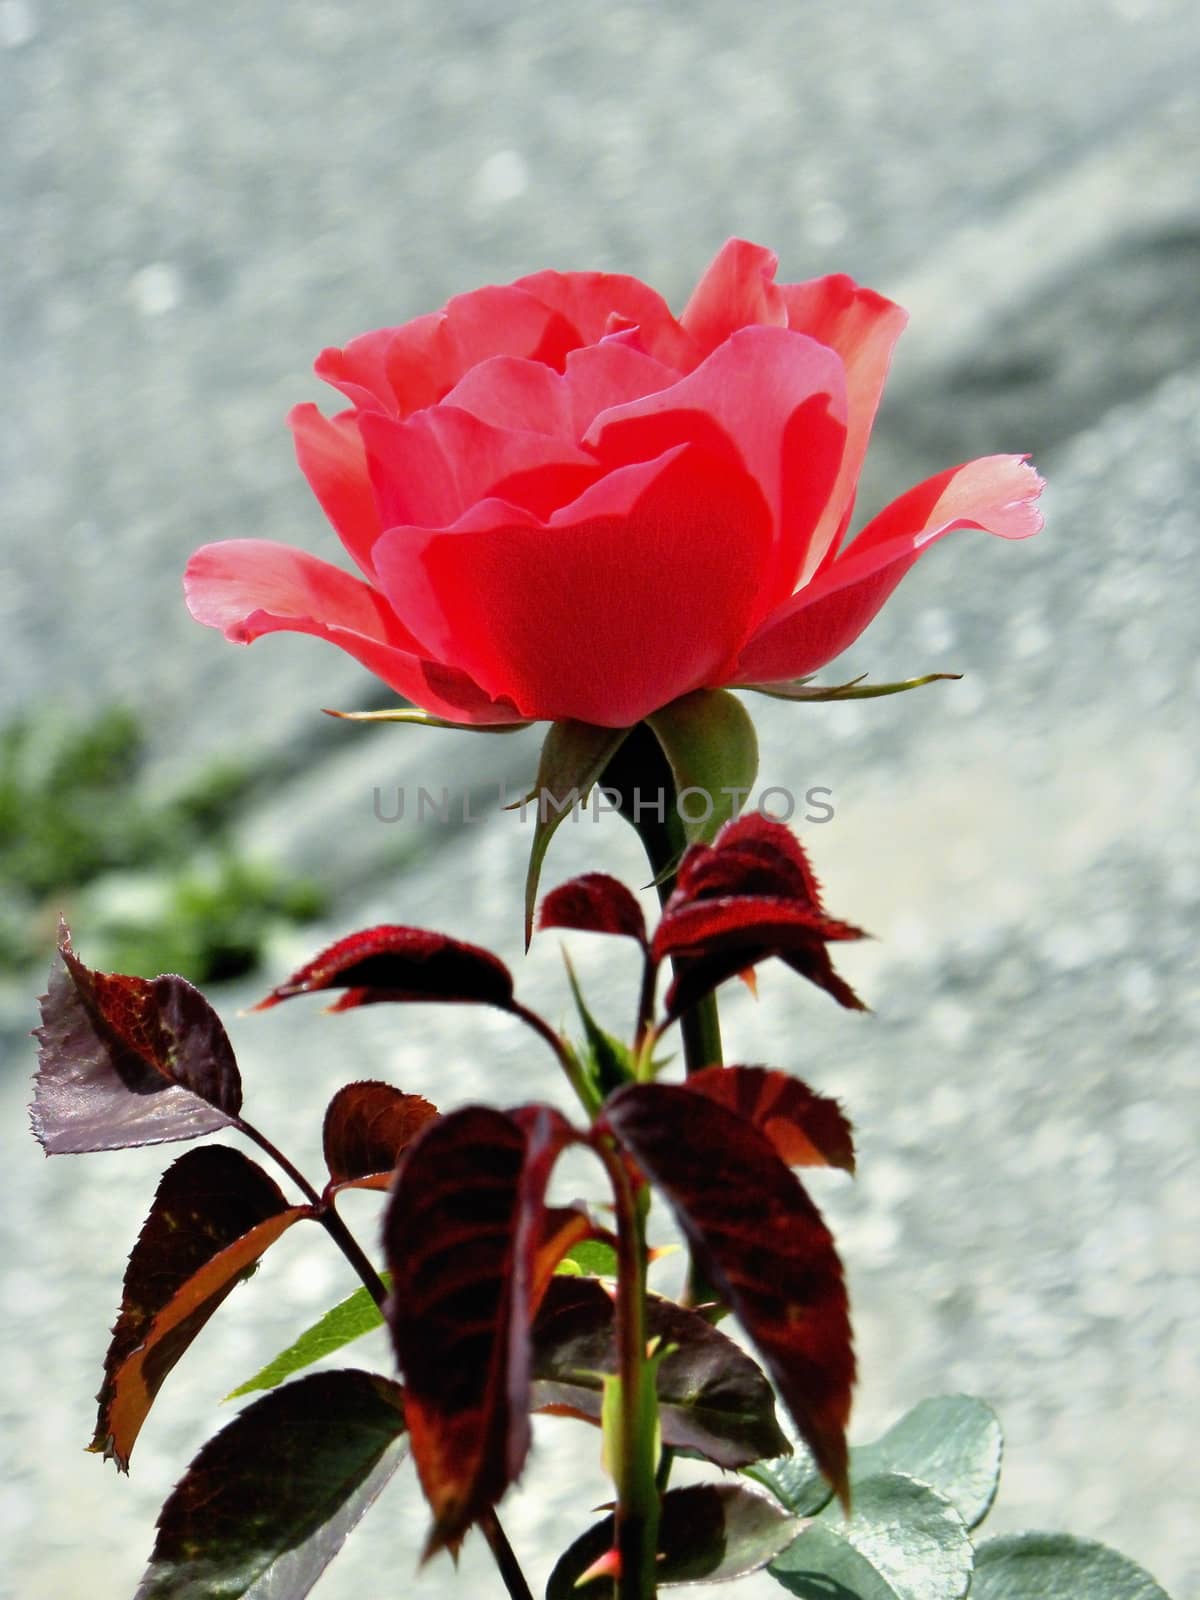 Single pink rose  in a  public garden, grey blurred background.